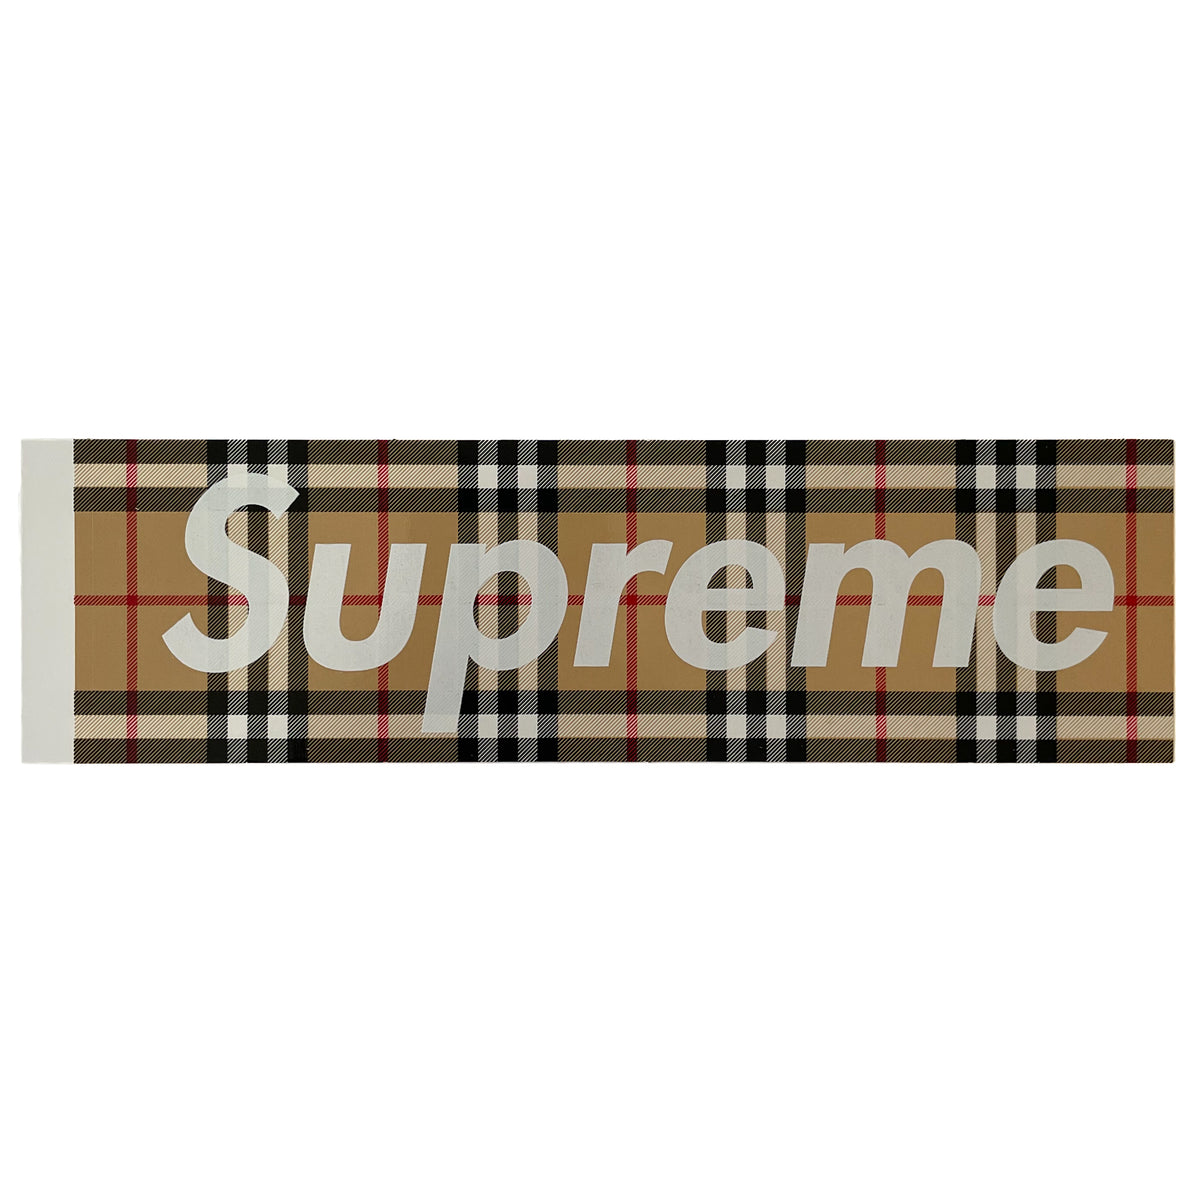 Supreme Beige Burberry Box Logo Sticker